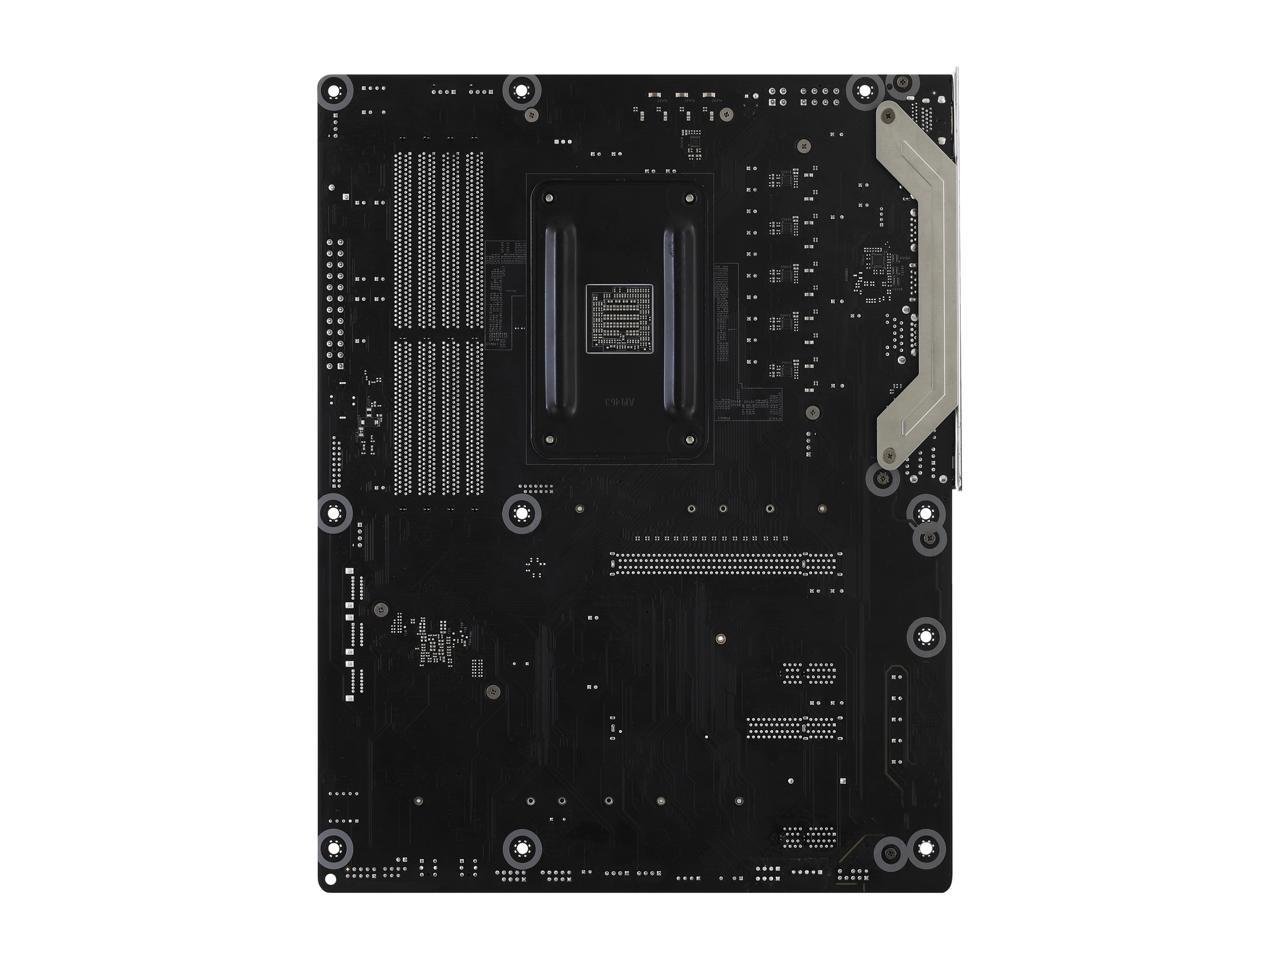 ASRock Phantom Gaming B550 AM4 ATX AMD Motherboard $139.99